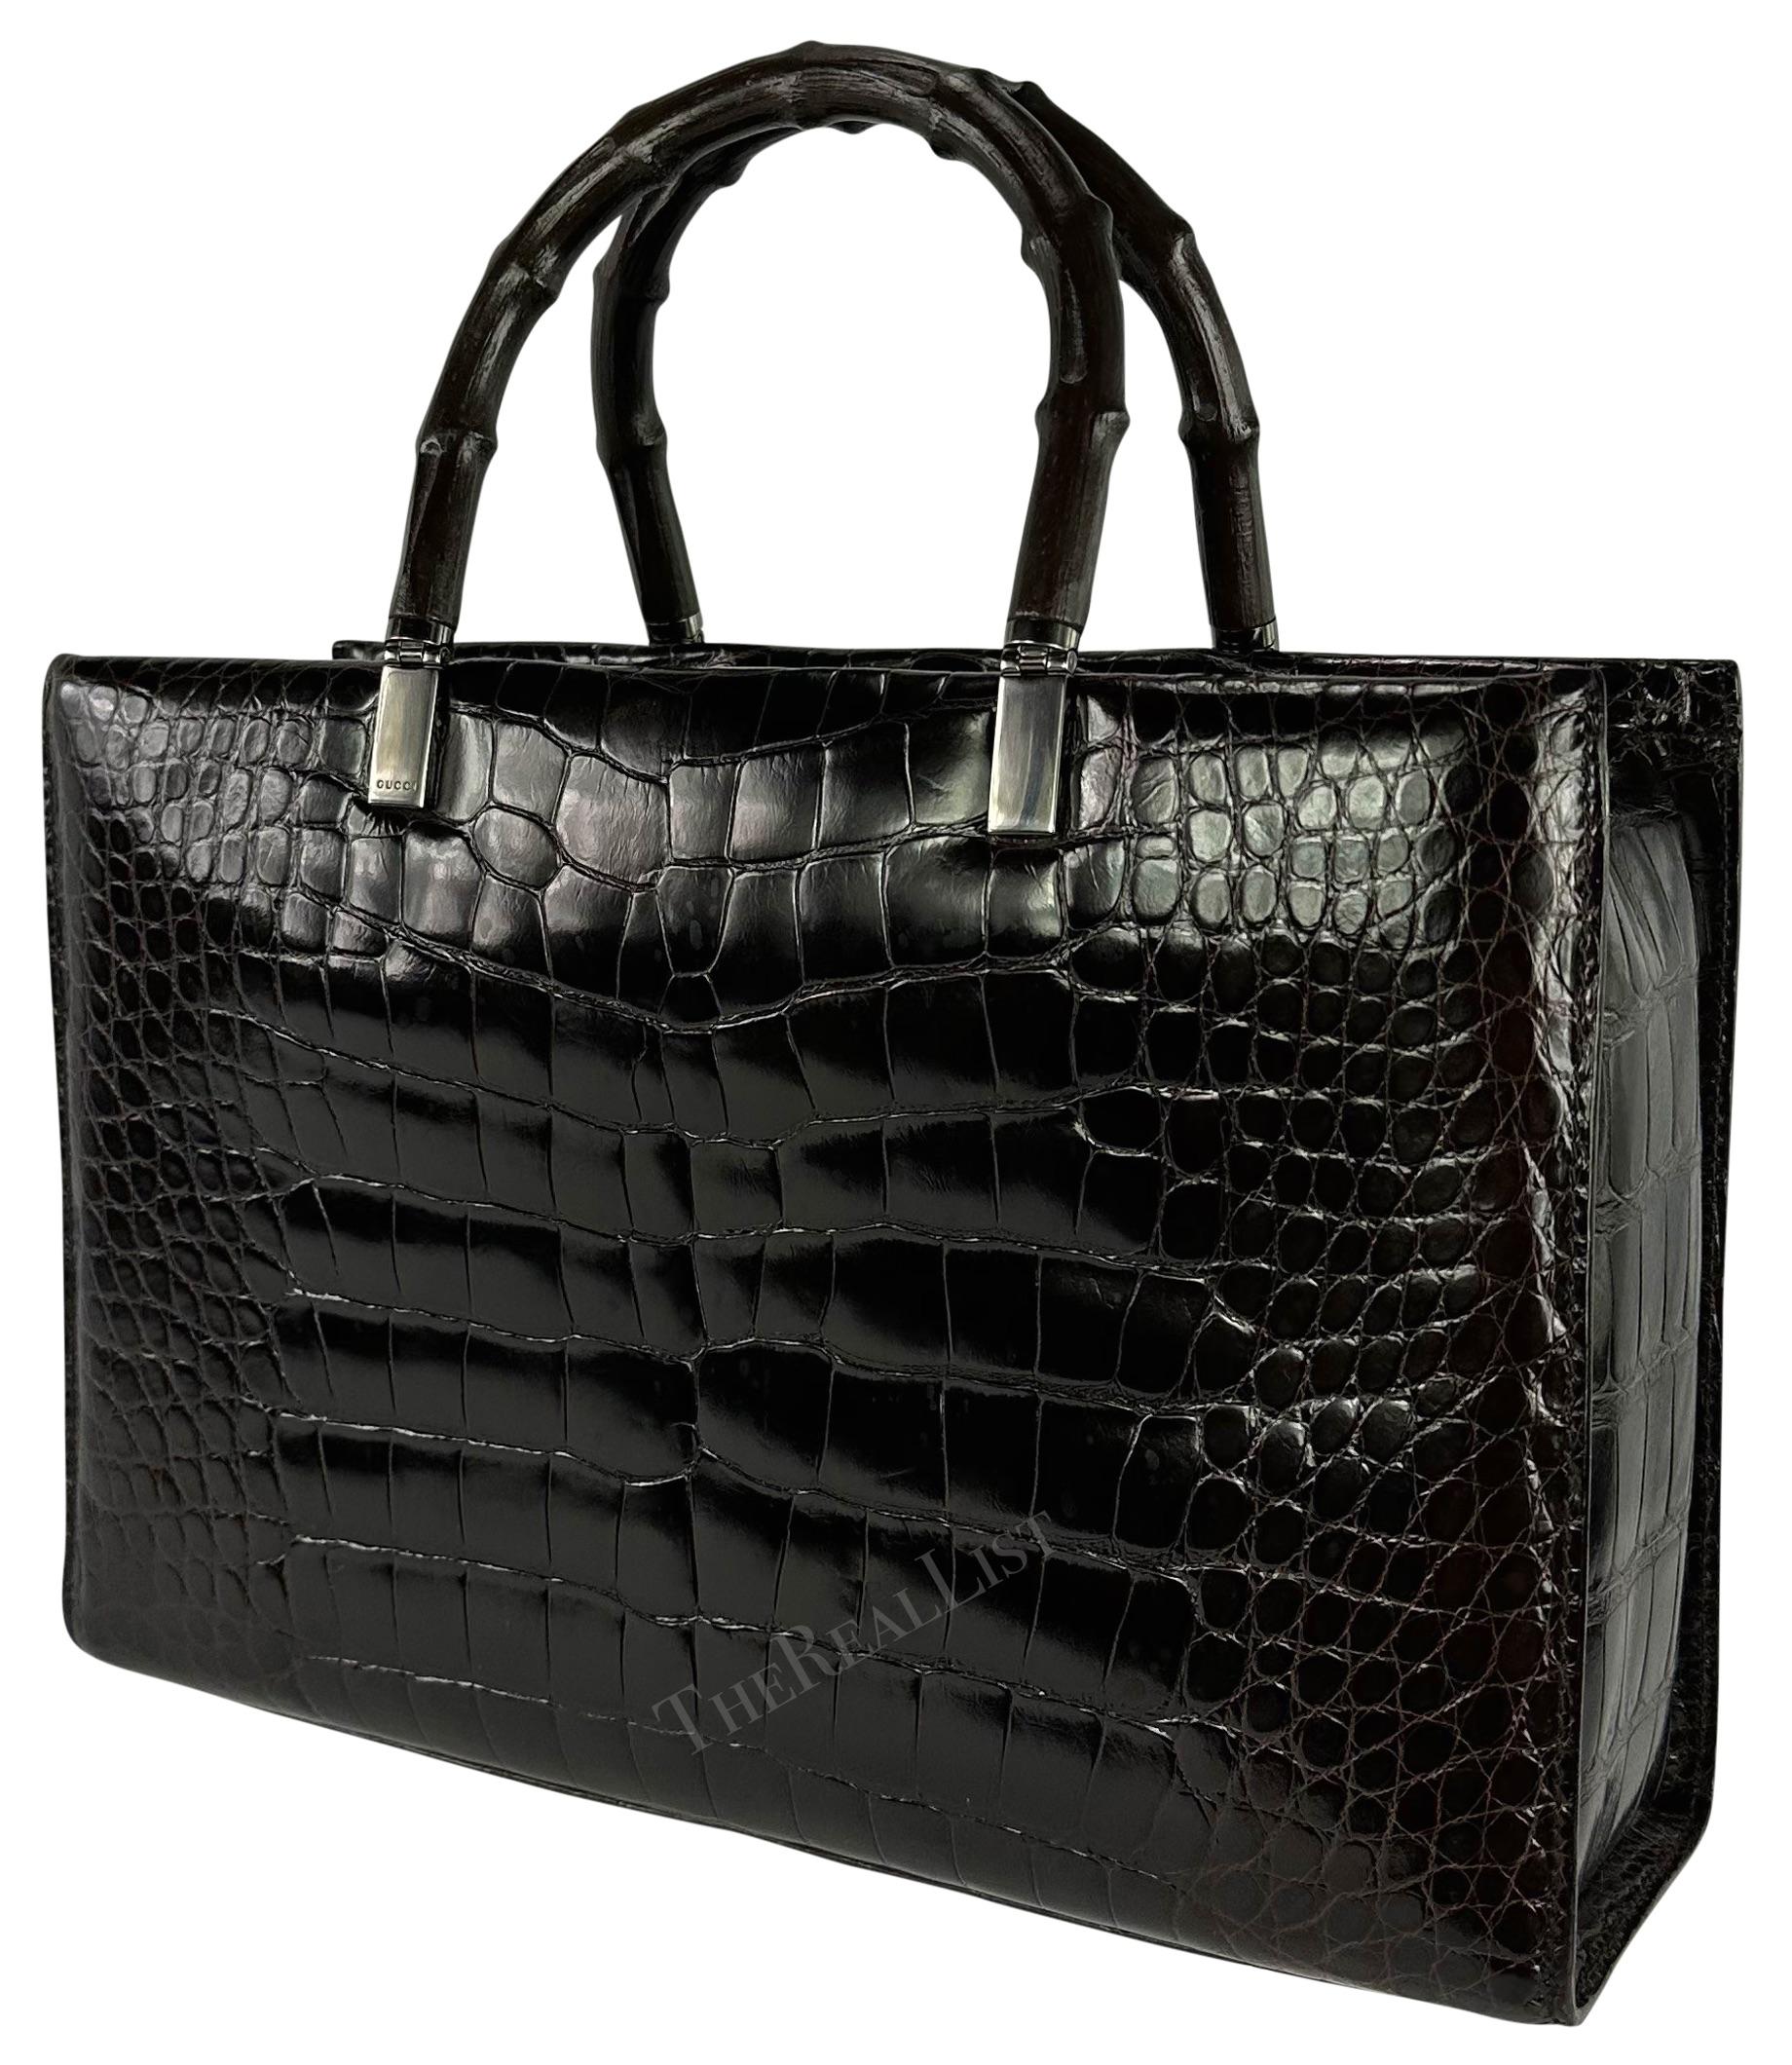 F/W 1998 Gucci by Tom Ford Ad Campaign Black Crocodile Bamboo Tote Bag  For Sale 2